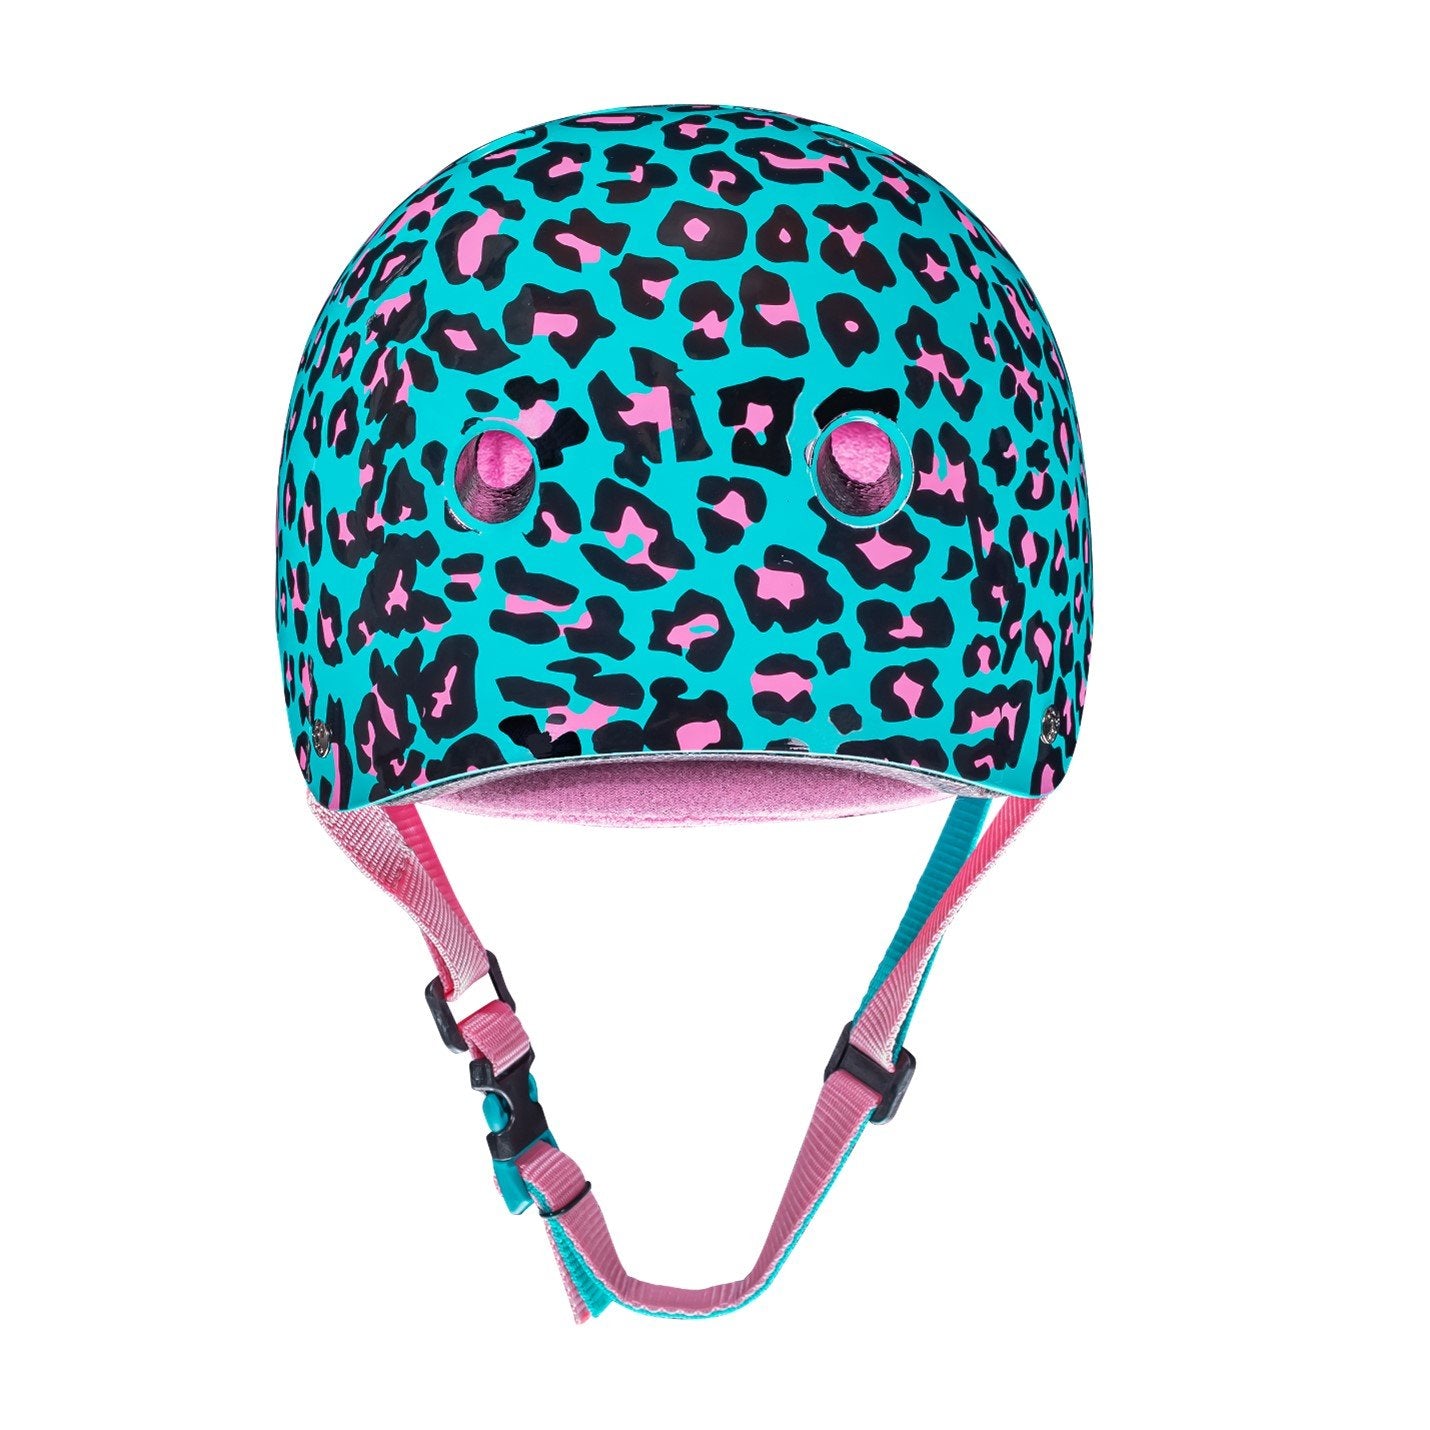 Moxi Blue Leopard Helmet XS/S